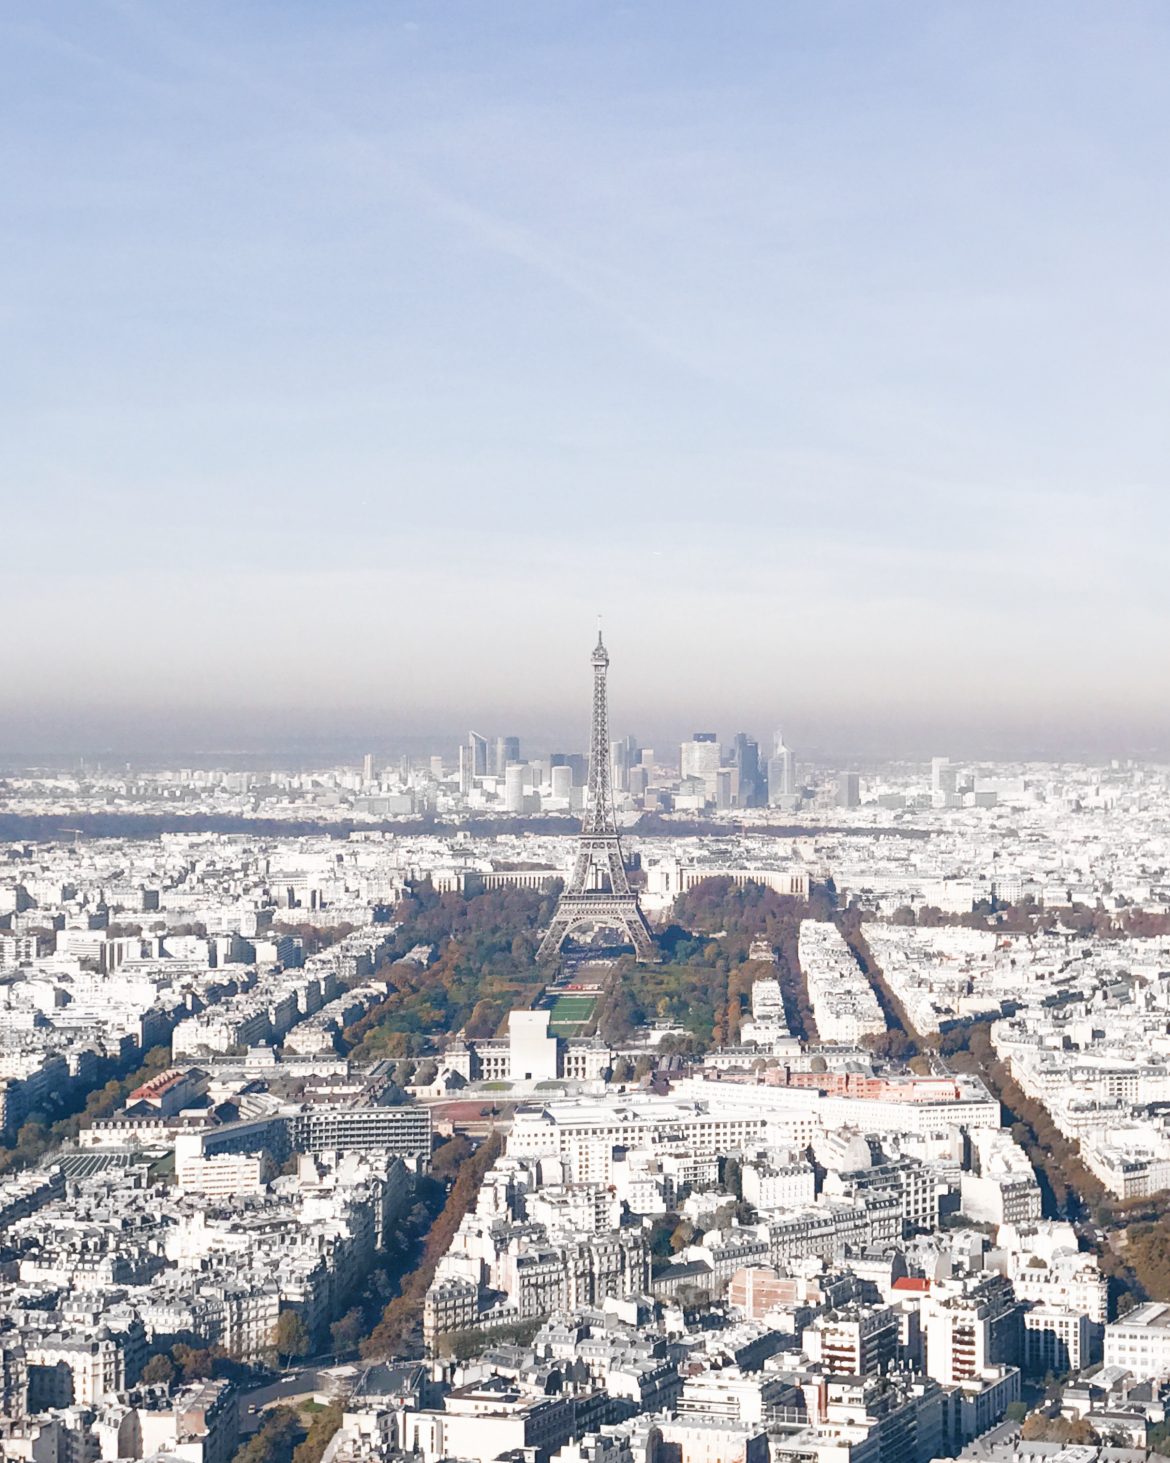 Vista de Paris e da Torre Eiffel - Ciel de Paris - Kezia Happuck